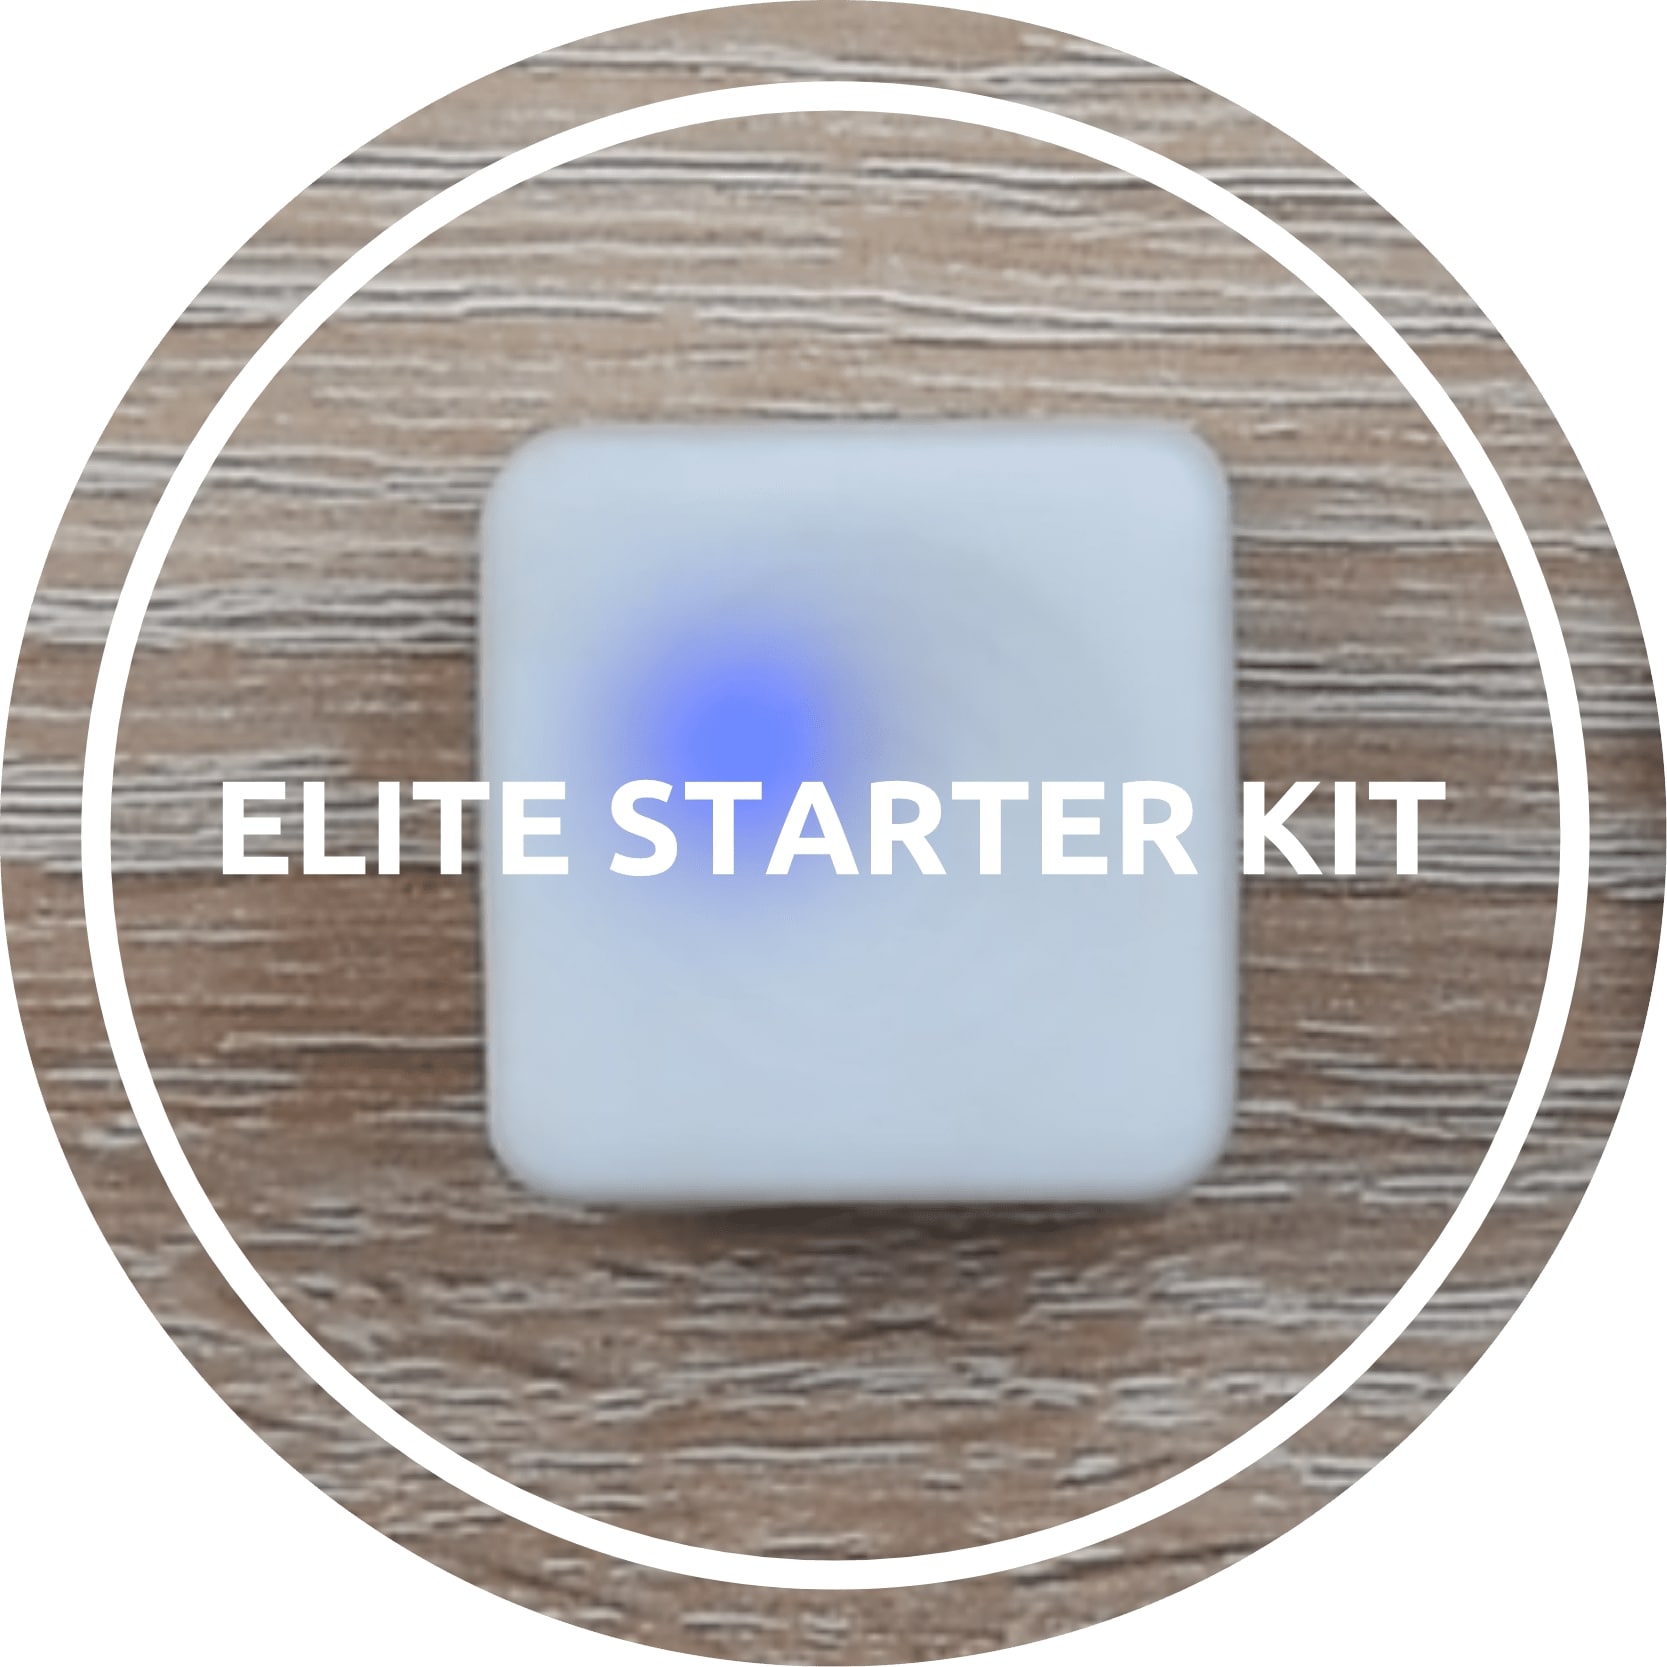 L’Elite Starter Kit include BLE-B e RPS con l’housing